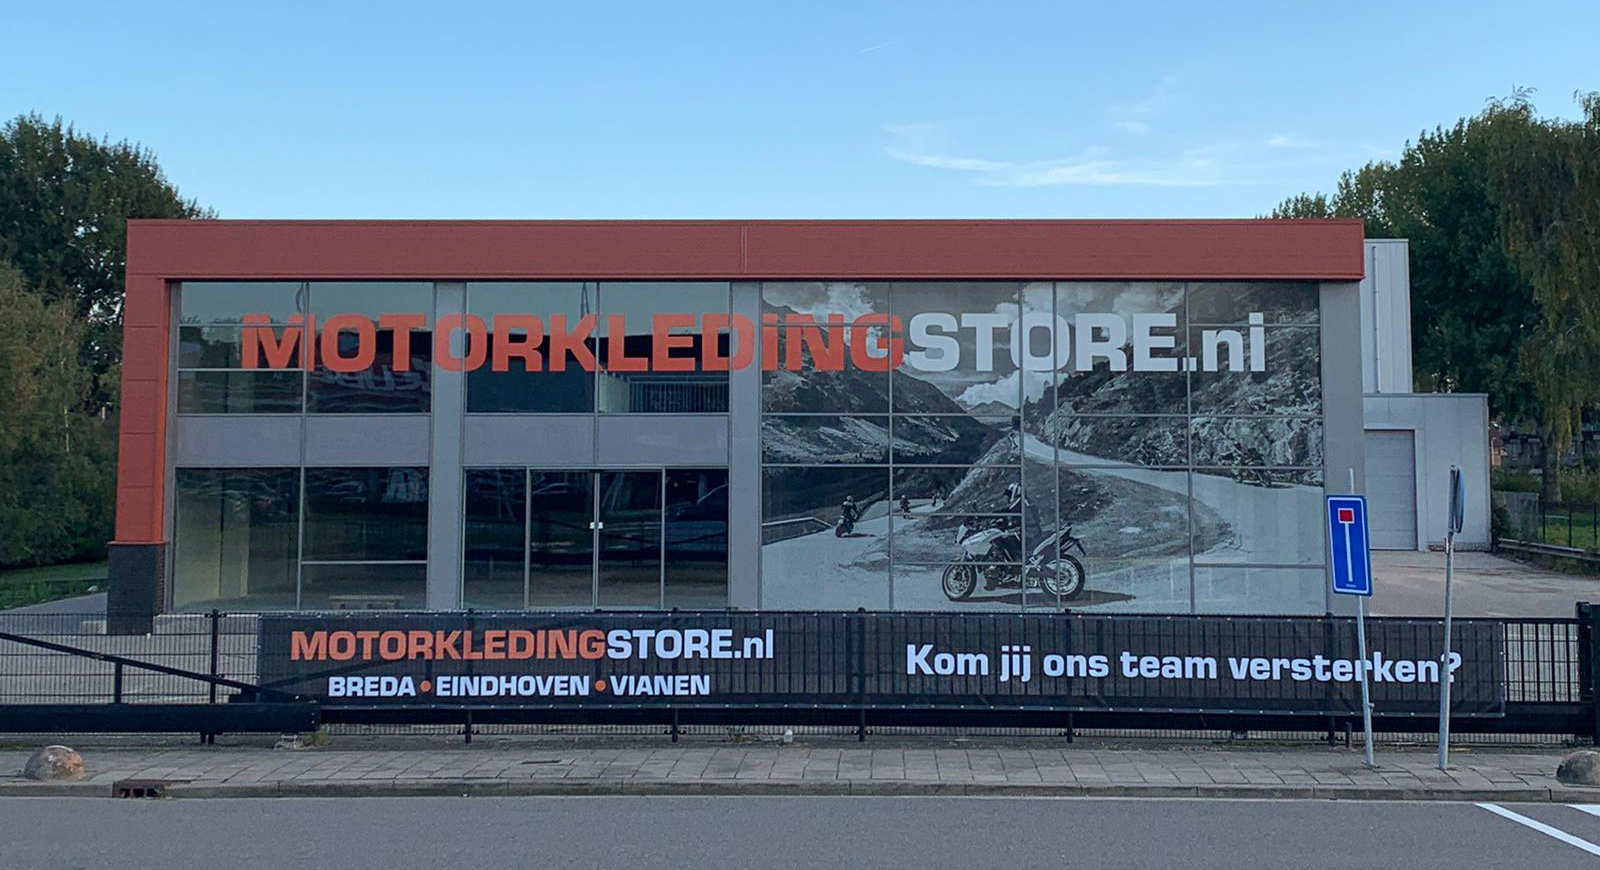 MotorkledingStore opent grootste motorkledingwinkel onder de rook van Rotterdam